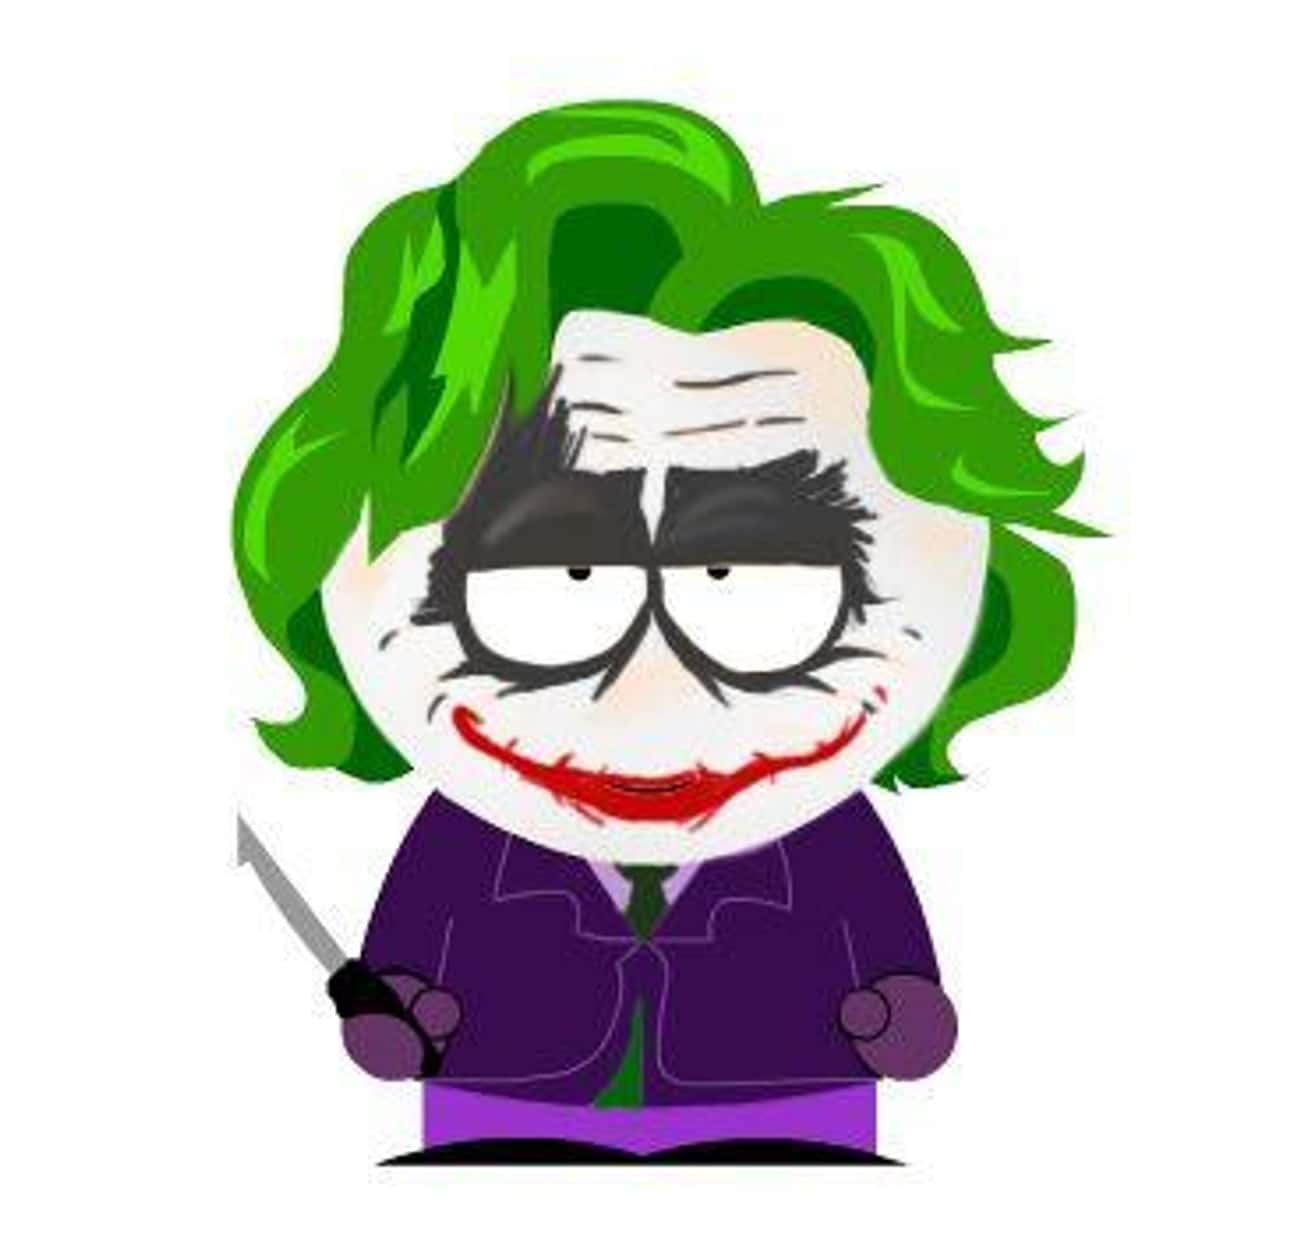 The Joker Who Is Less Evil Than Cartman